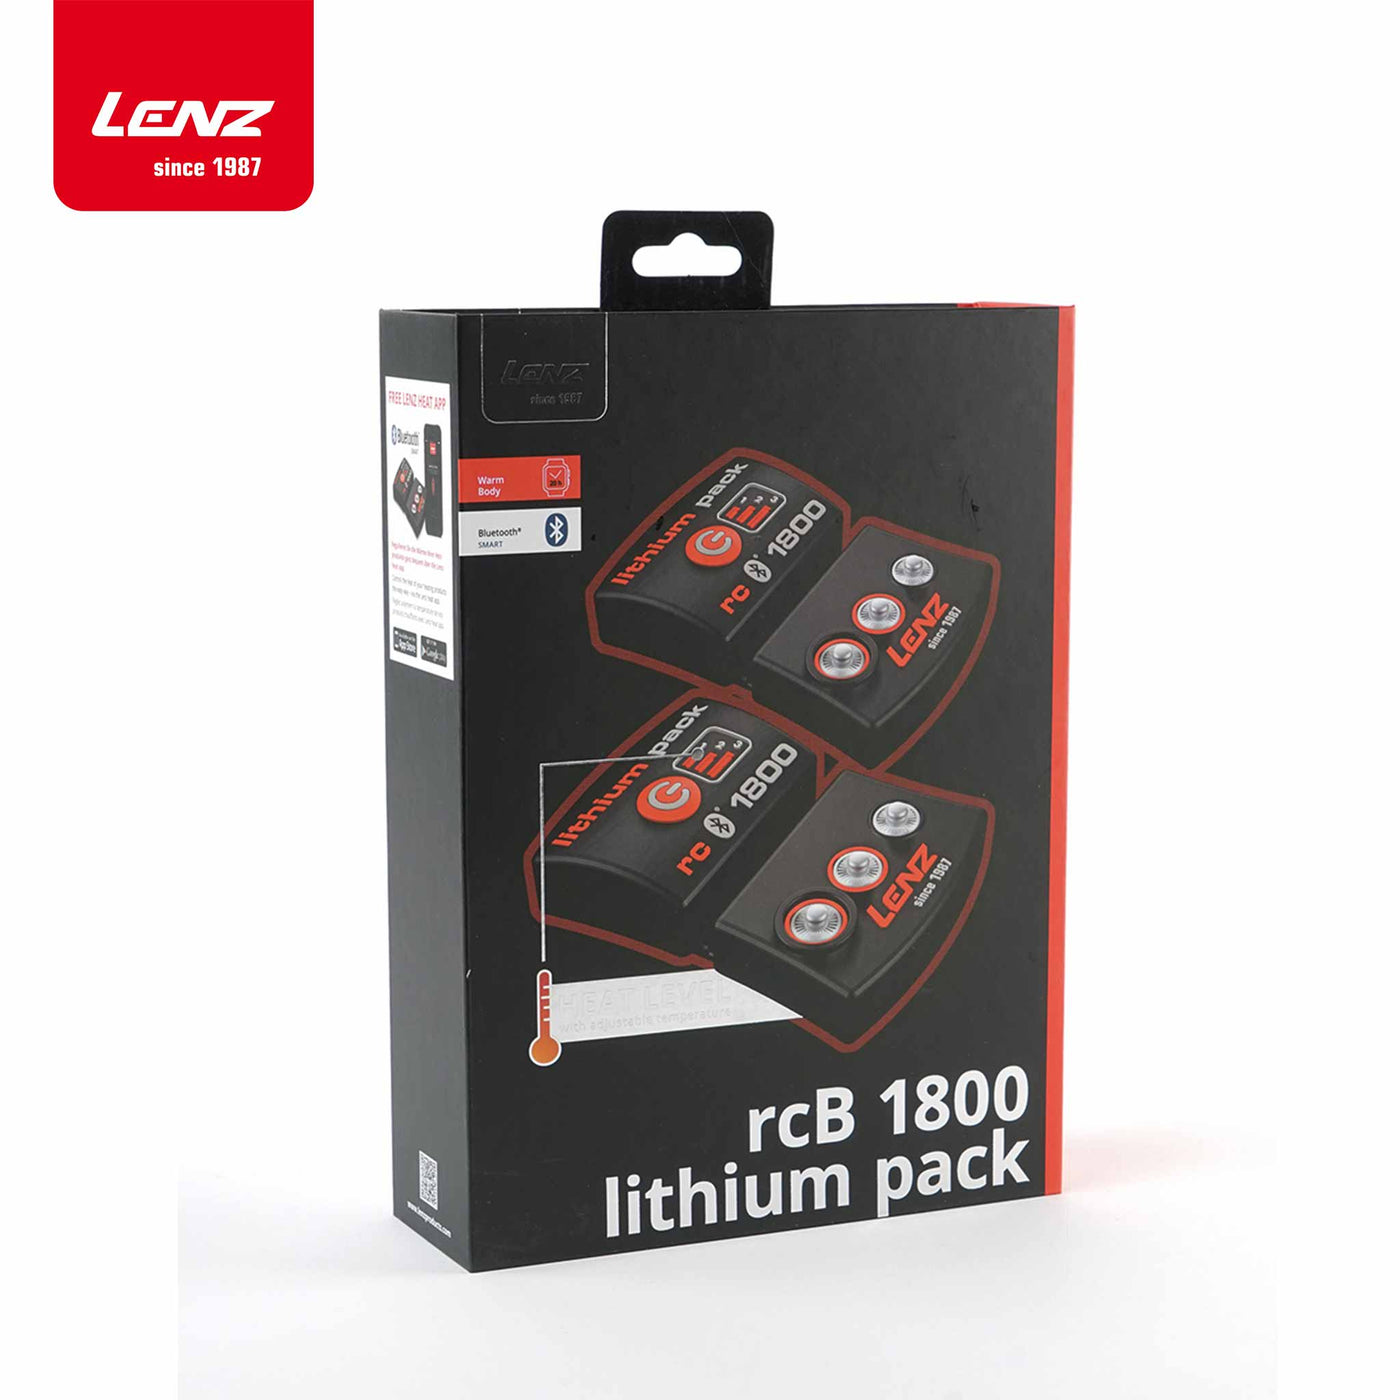 Lenz Lithium Pack rcB 1800 mit Bluetooth